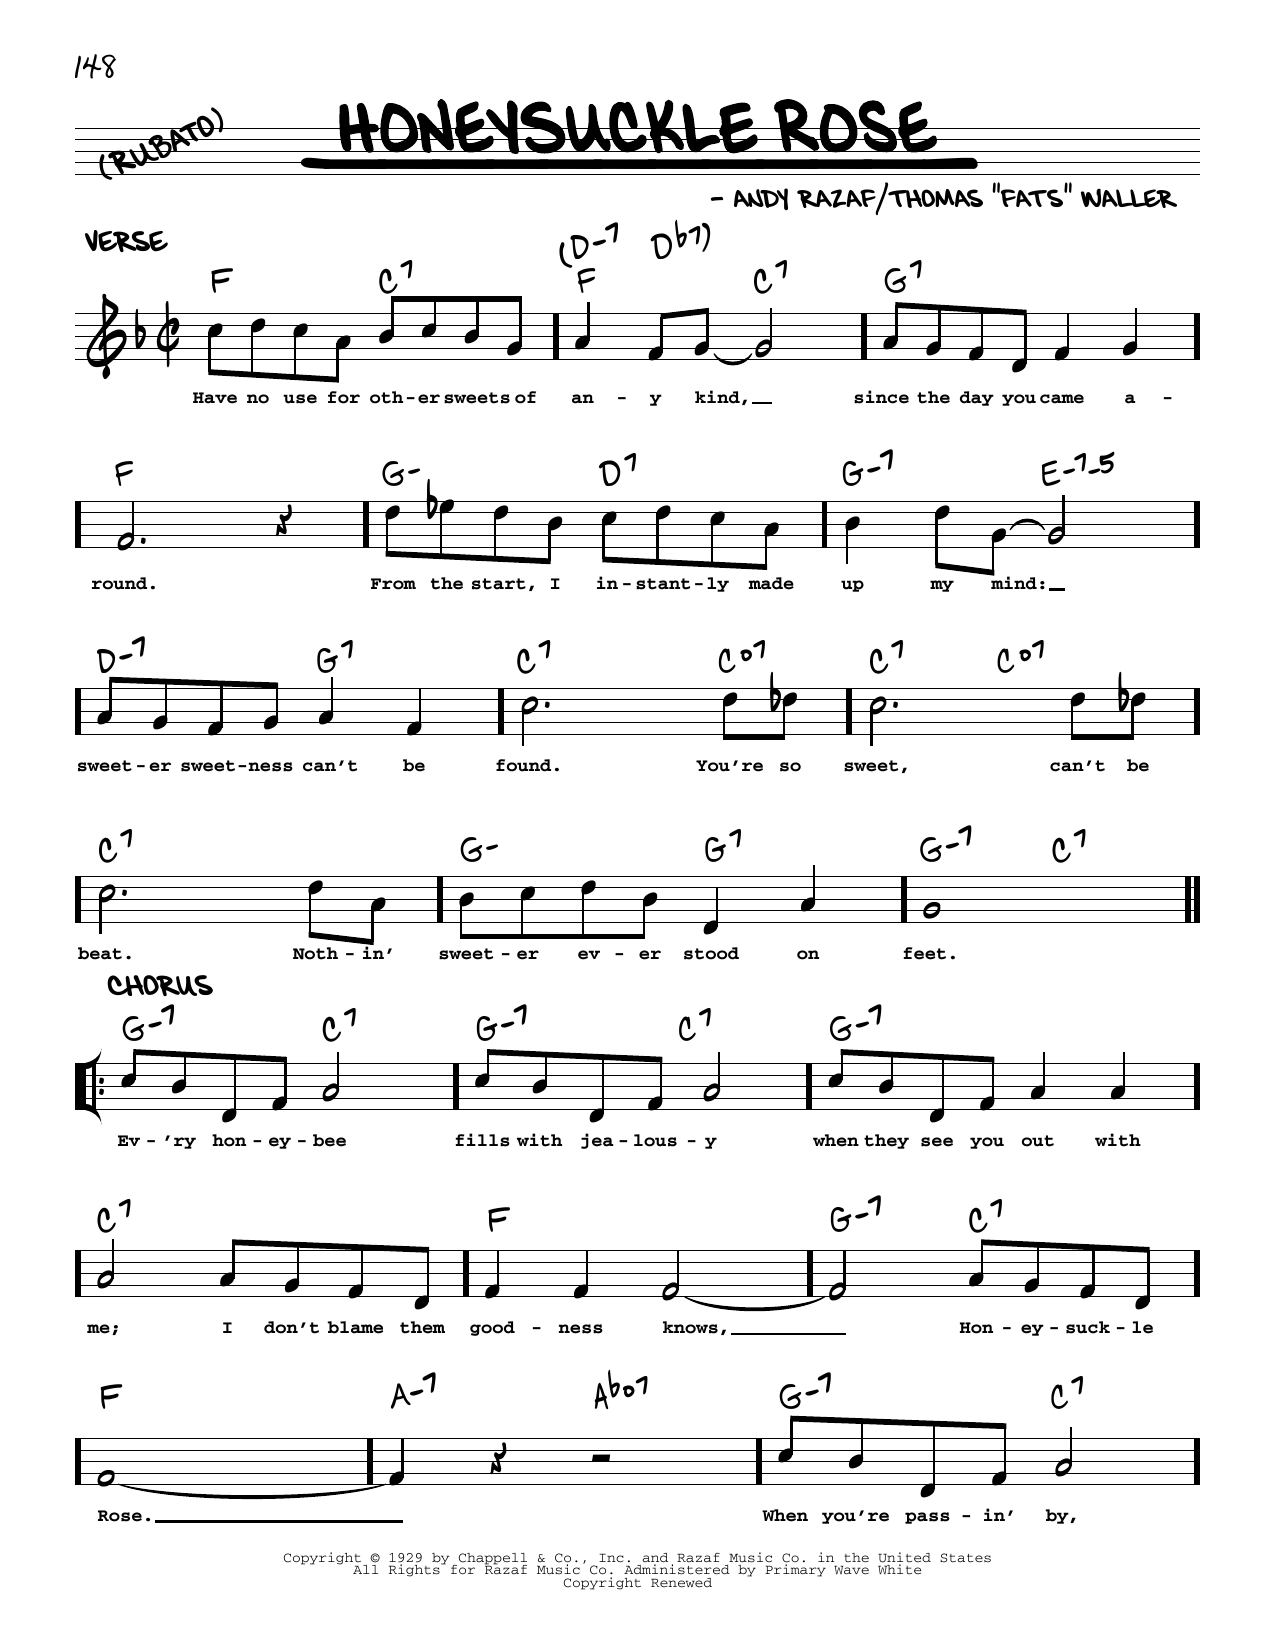 Django Reinhardt Honeysuckle Rose (arr. Robert Rawlins) Sheet Music Notes & Chords for Real Book – Melody, Lyrics & Chords - Download or Print PDF